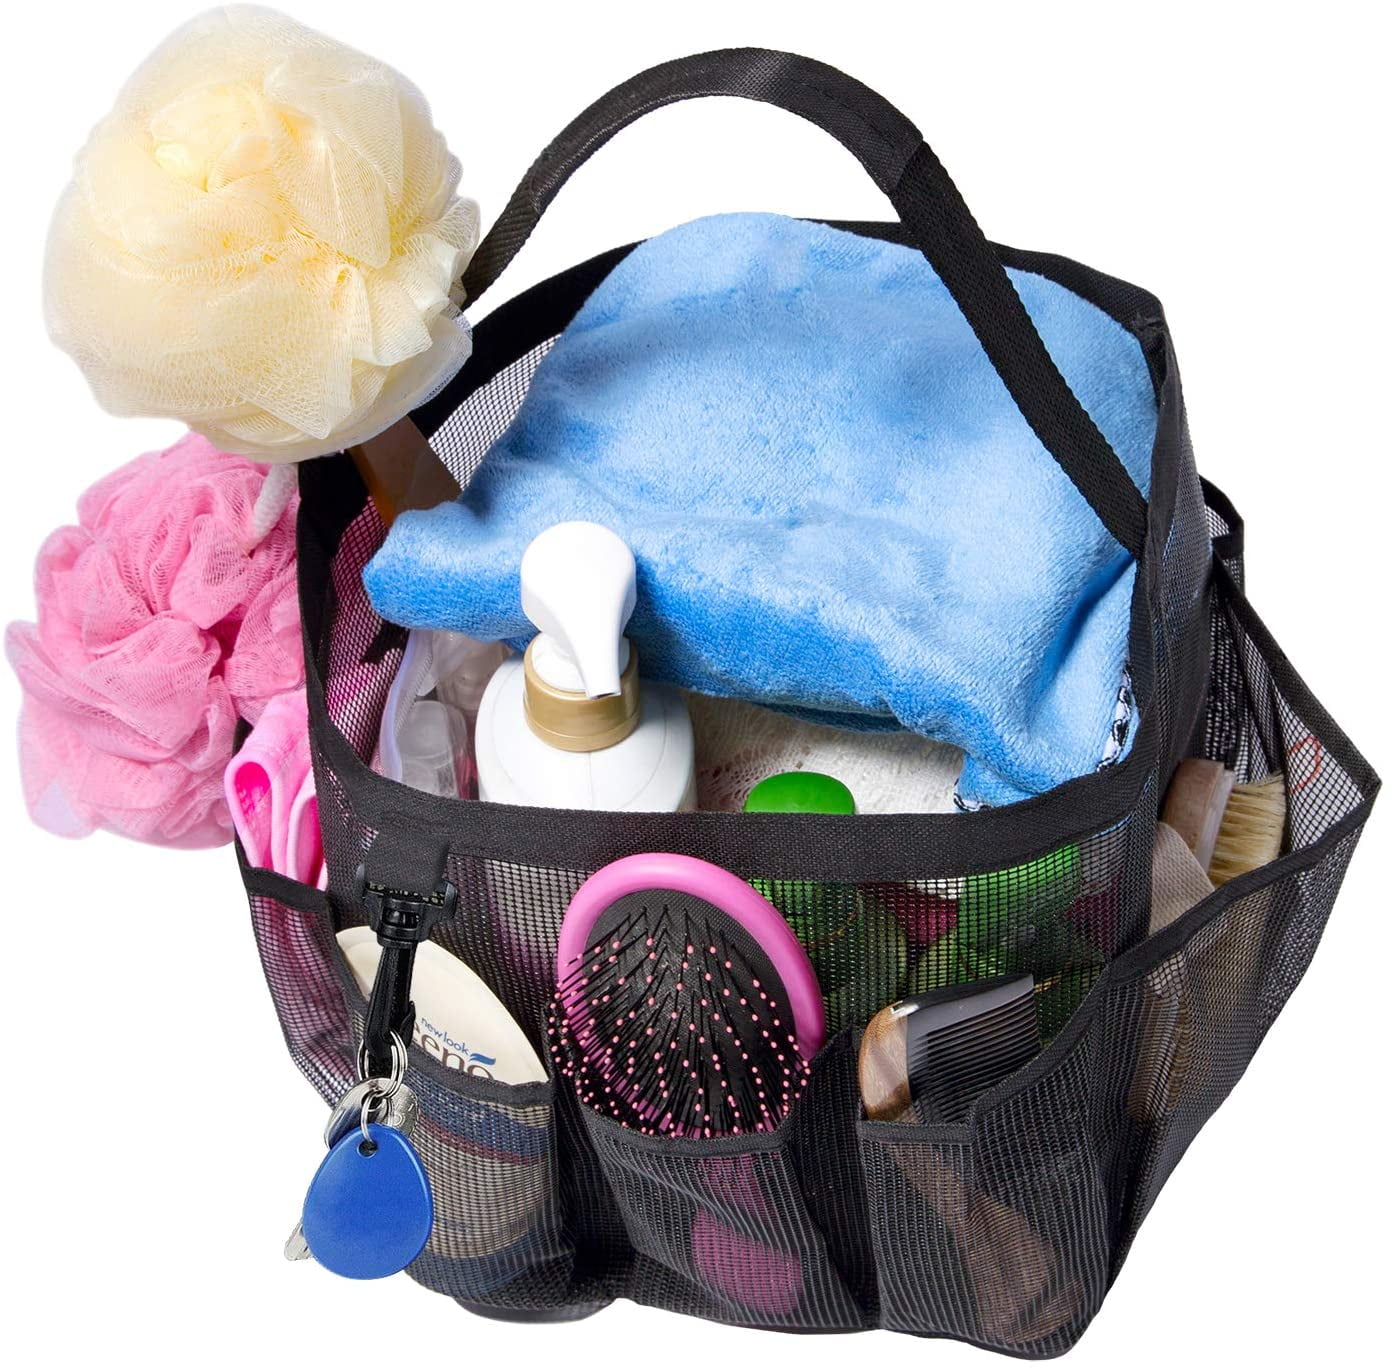 F Room Essentials Target Shower Caddy Portable Mesh Tote Dorm Travel NWT Blue